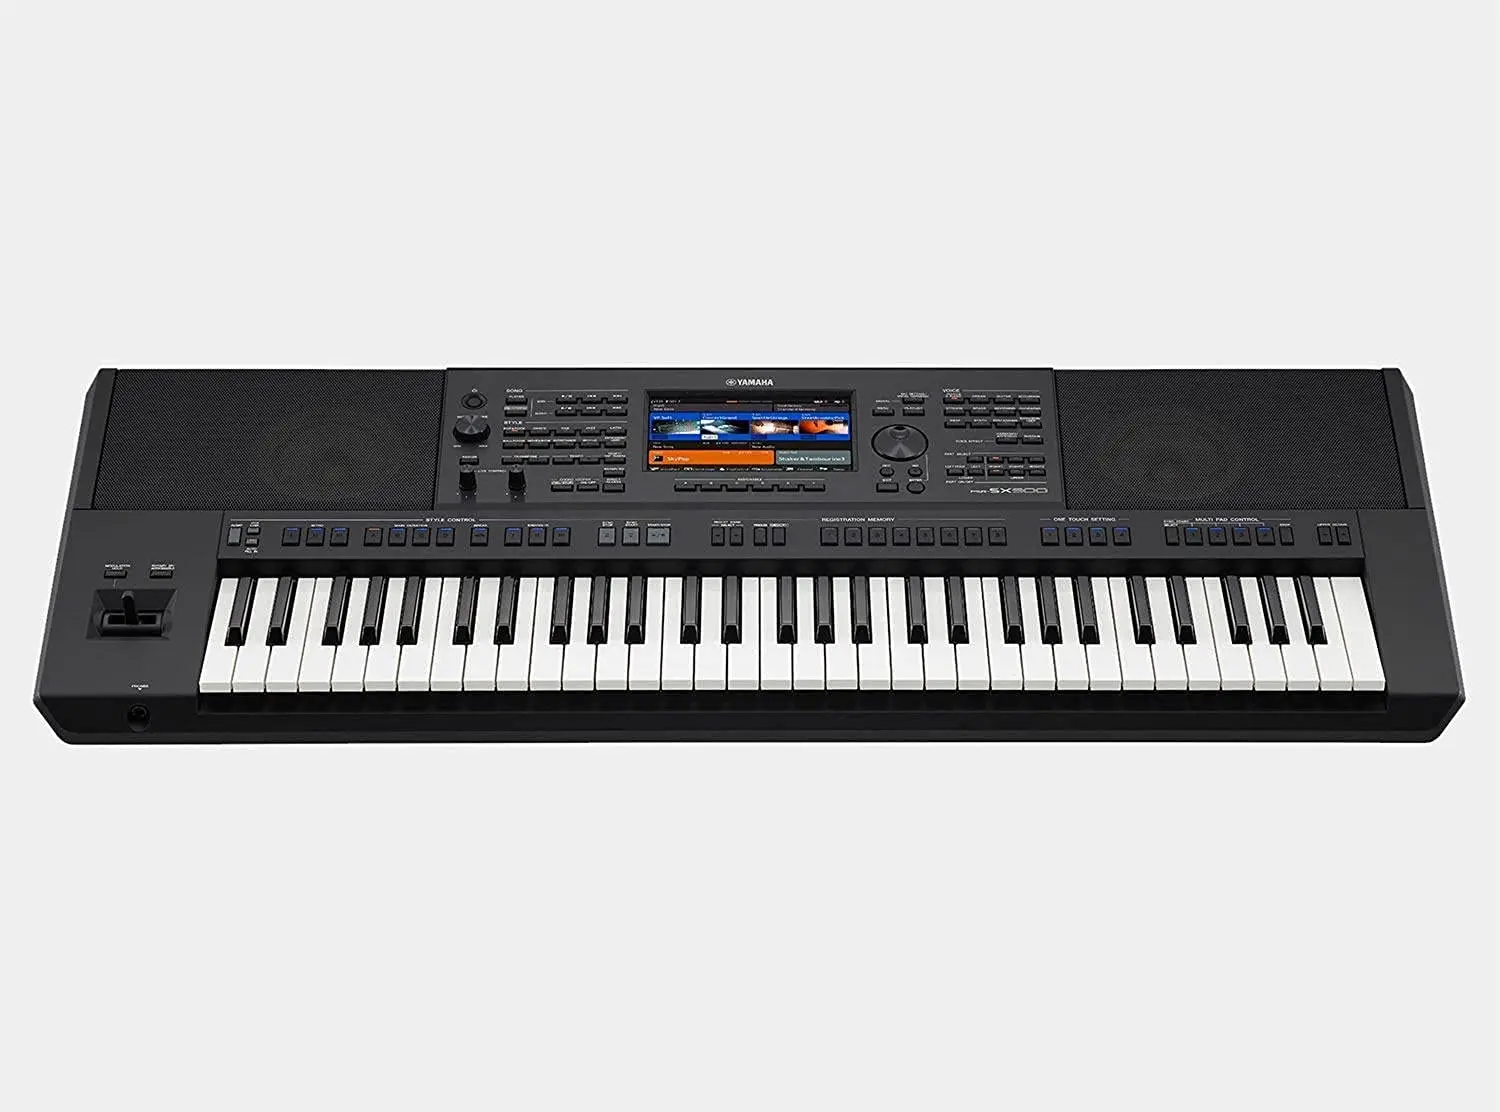 (НОВЫЙ бренд) Набор клавиатур PSR SX900 S975 SX700 S970 Deluxe keyboards1